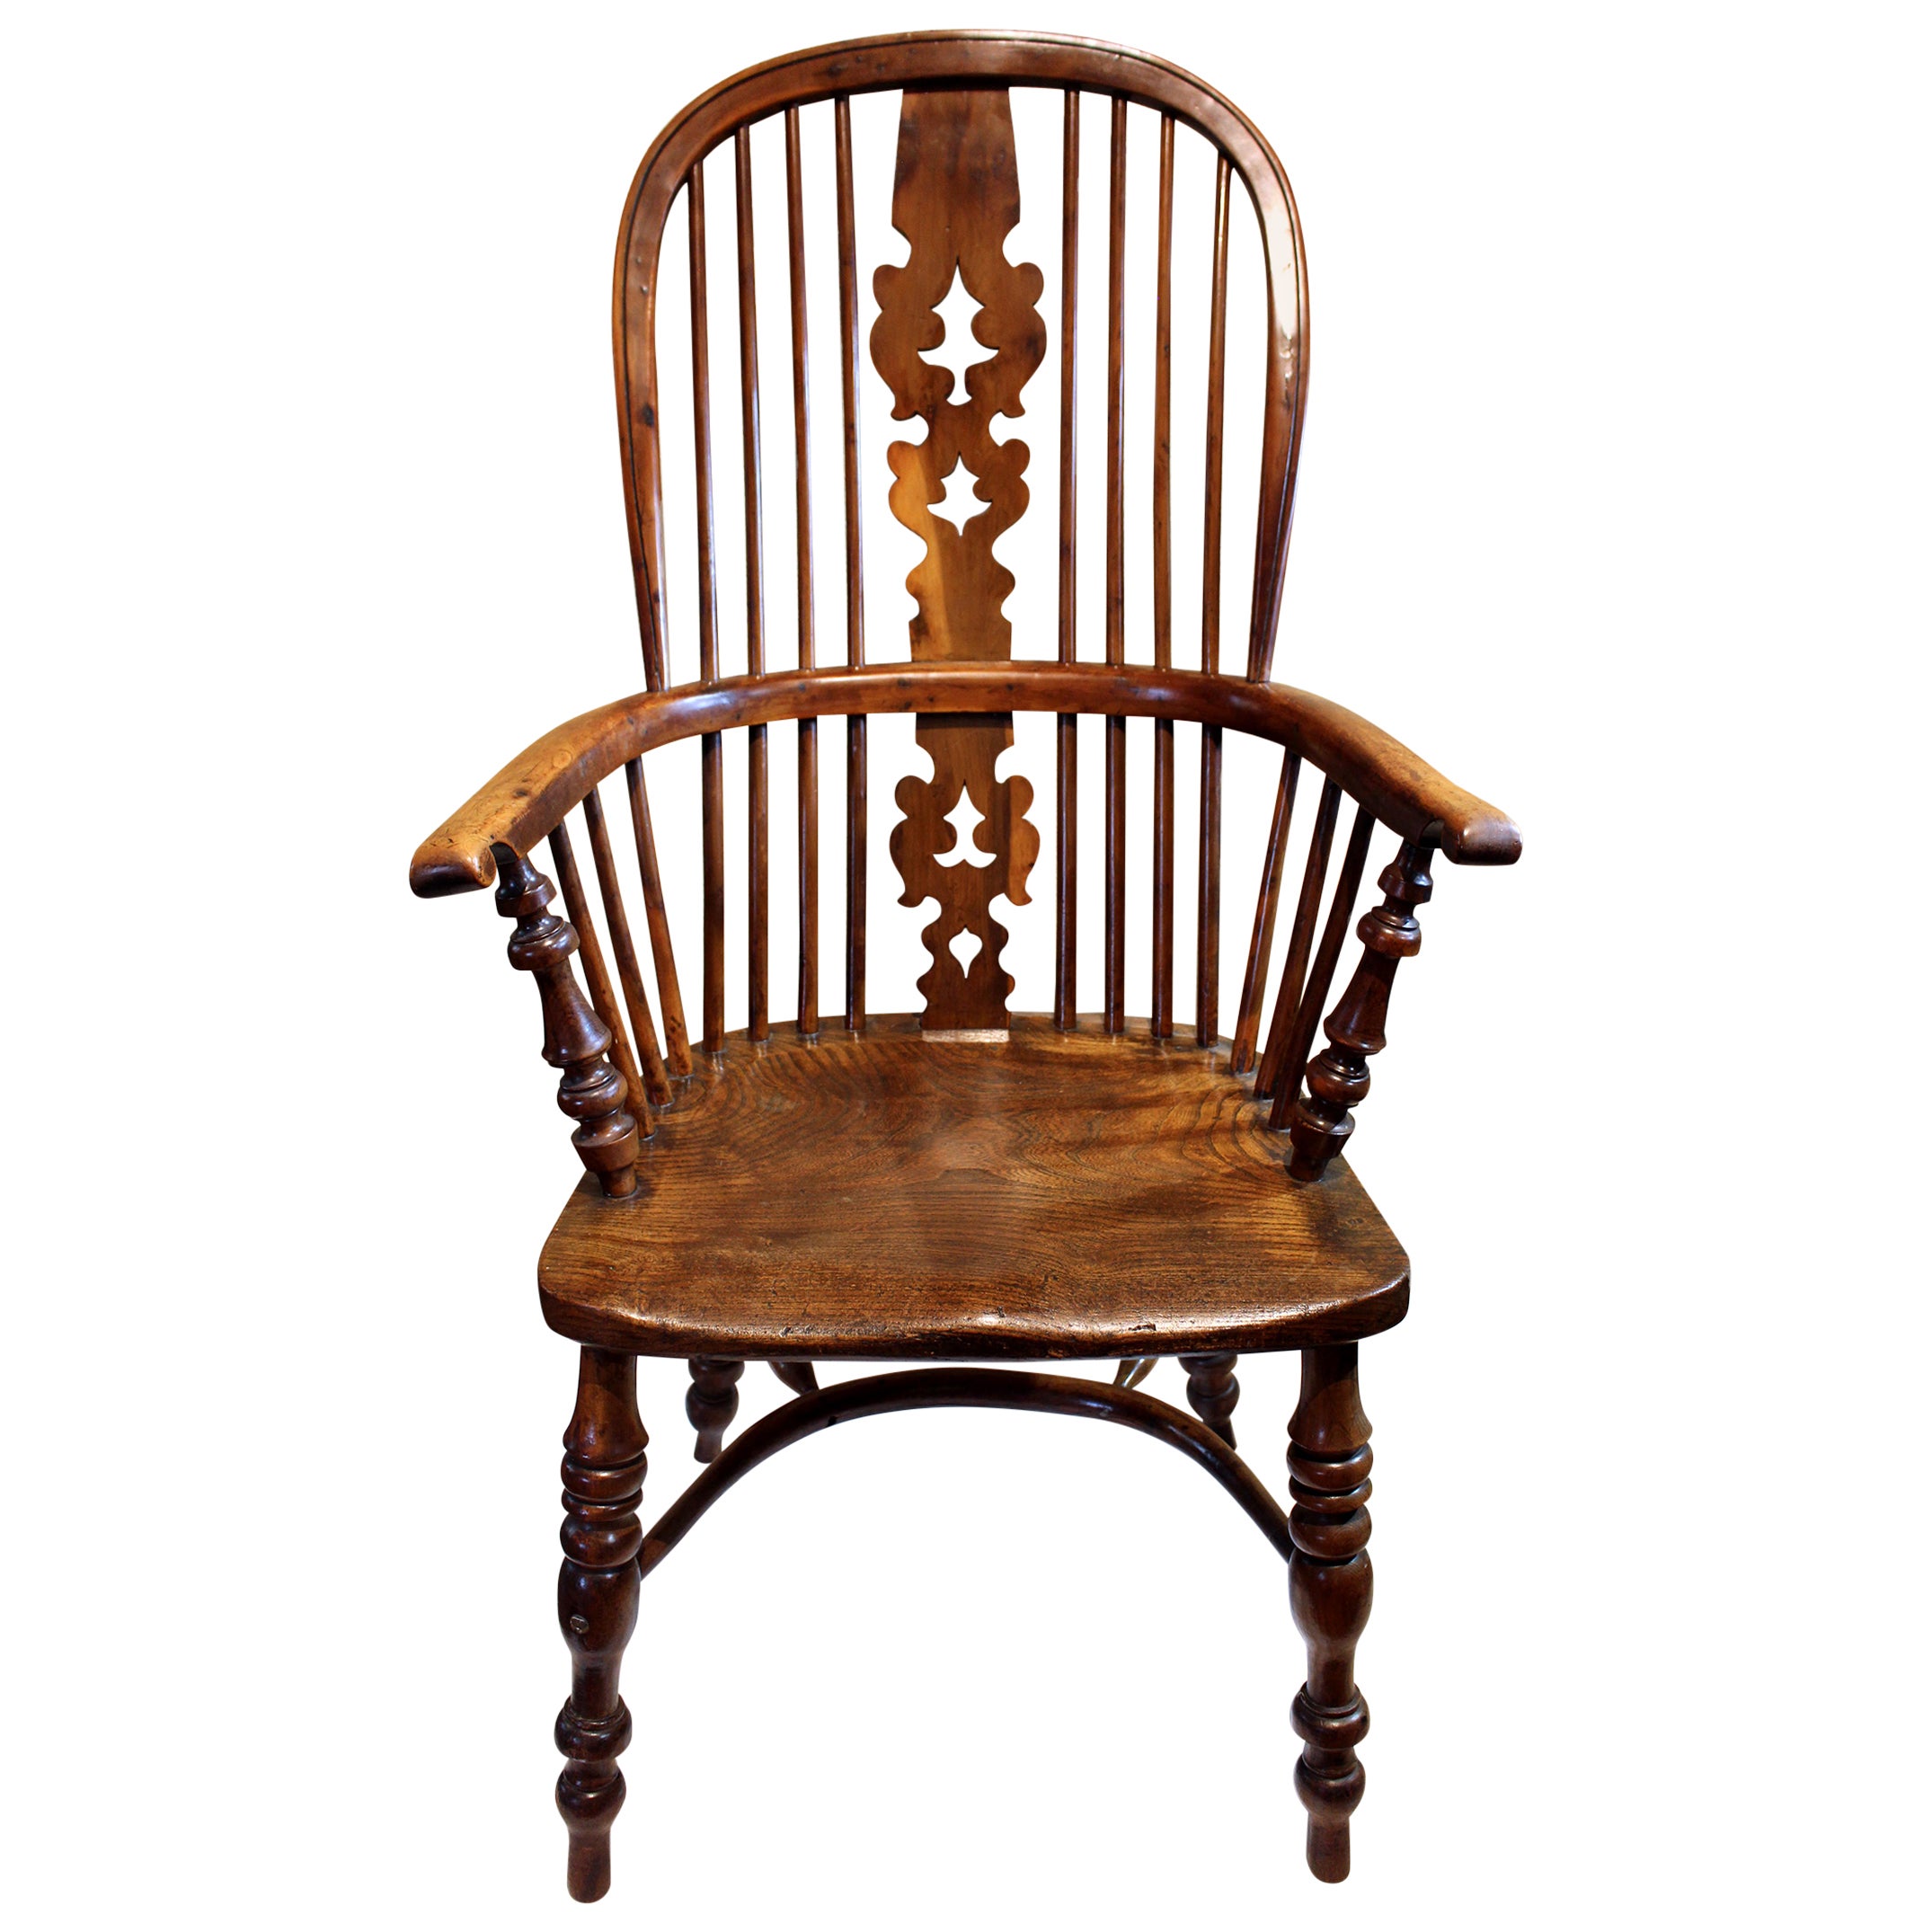 Circa 1830 English High Back Windsor Arm Chair, Yew Wood